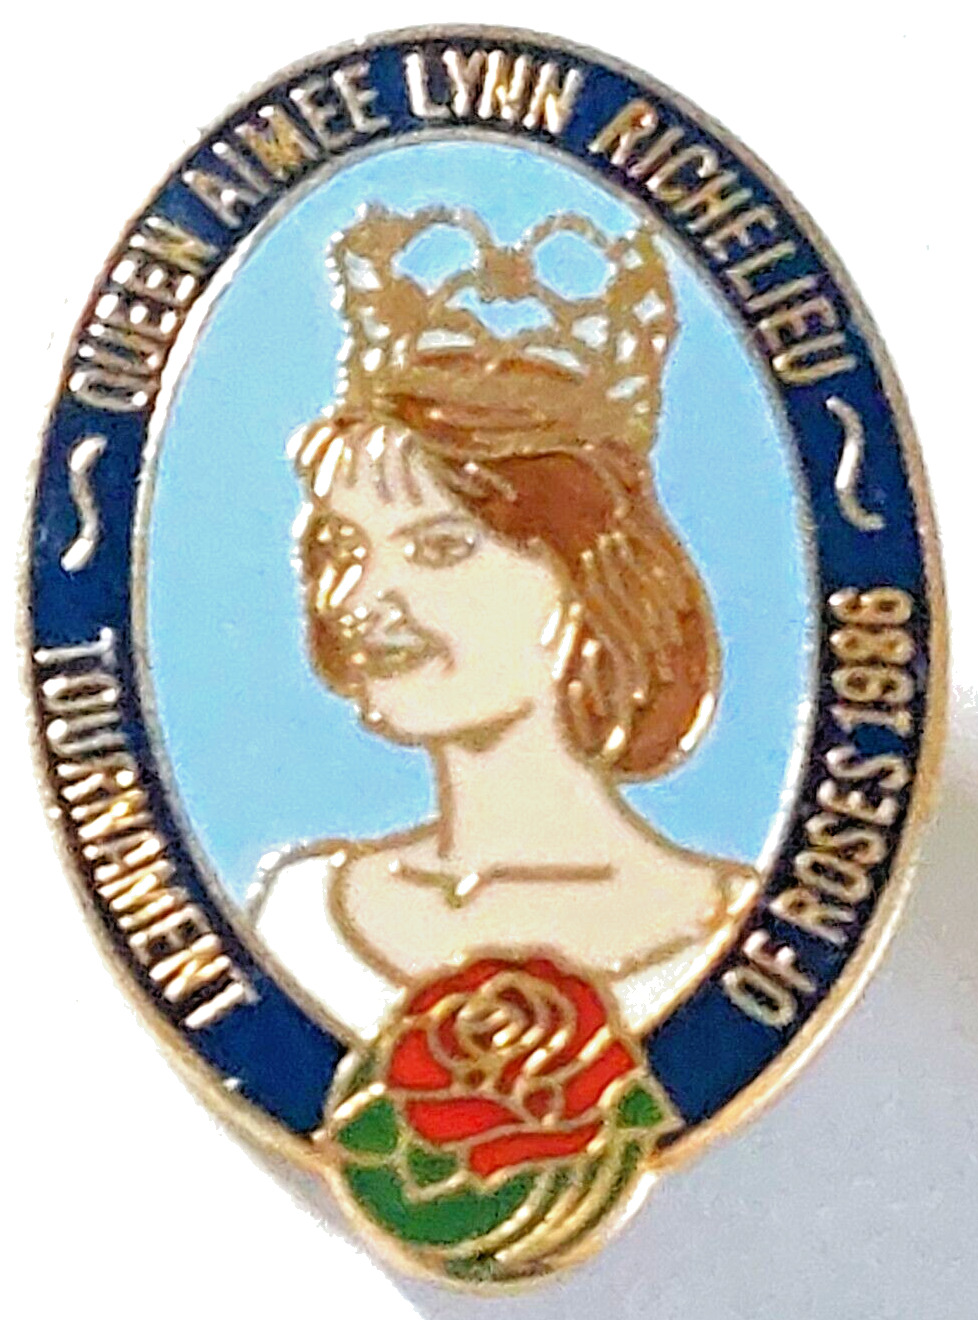 Rose Parade 1986 Queen Aimee Lynn Richelieu 97th Tournament of Roses Lapel Pin